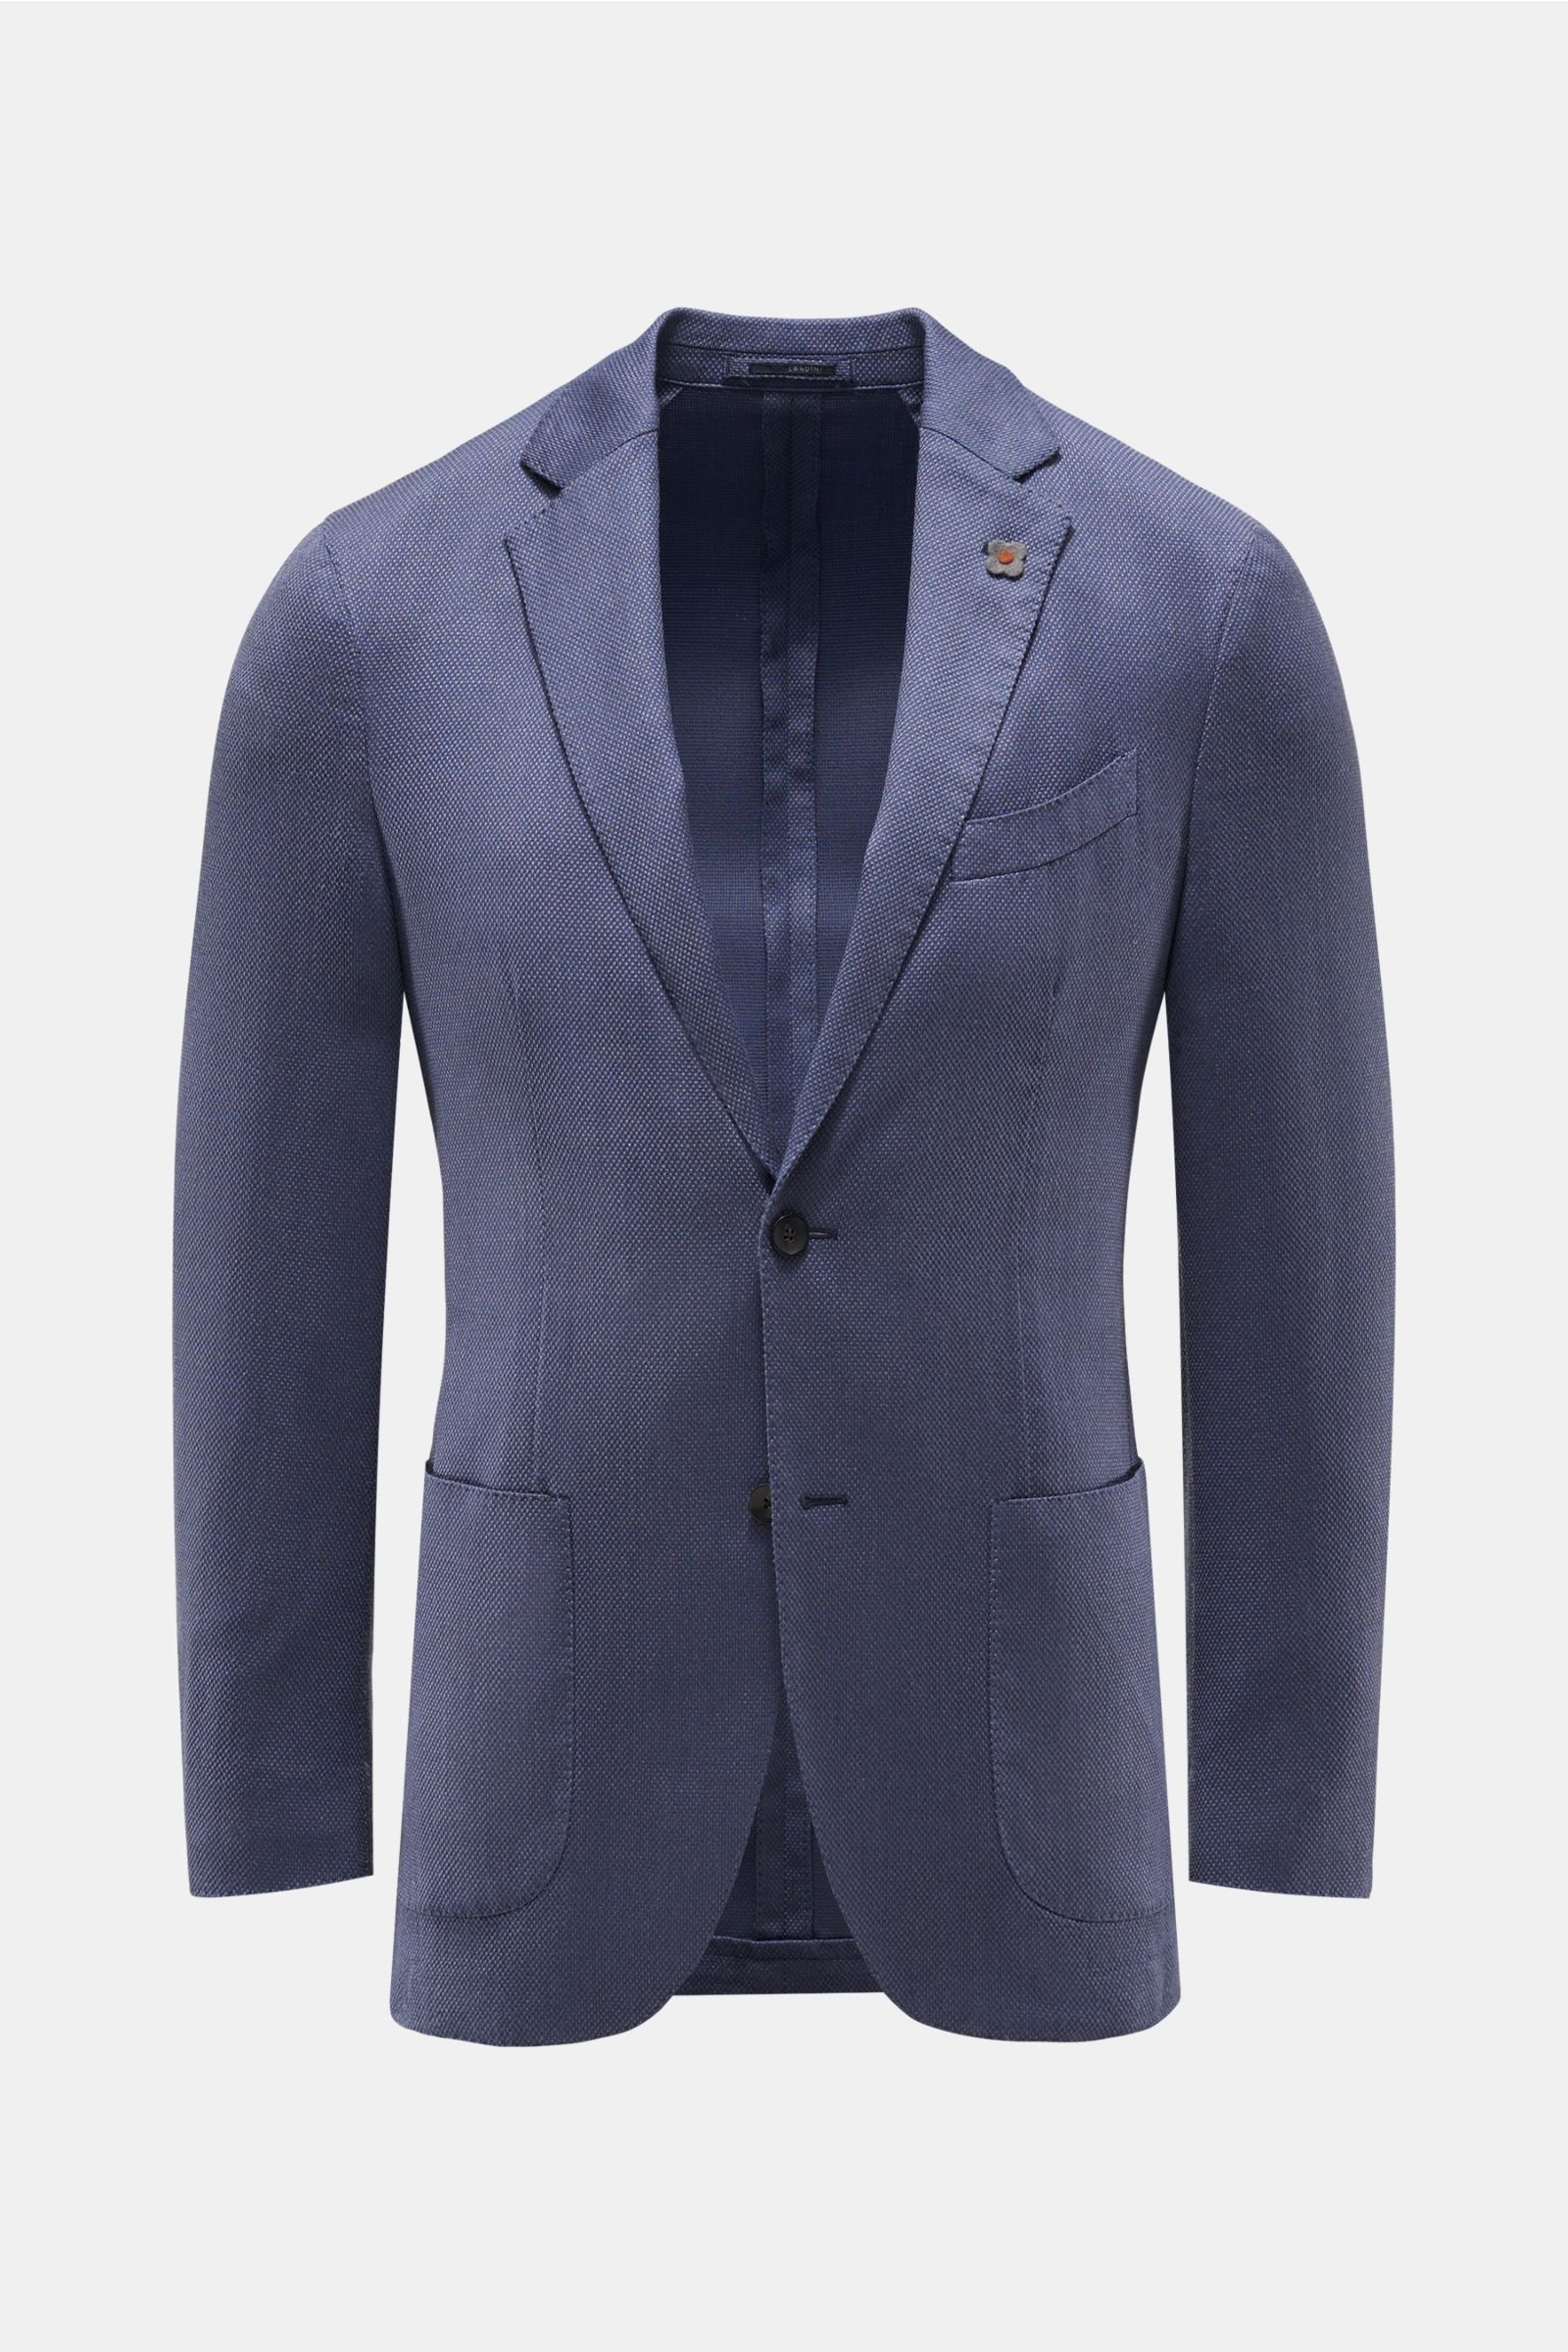 Smart-casual jacket grey-blue